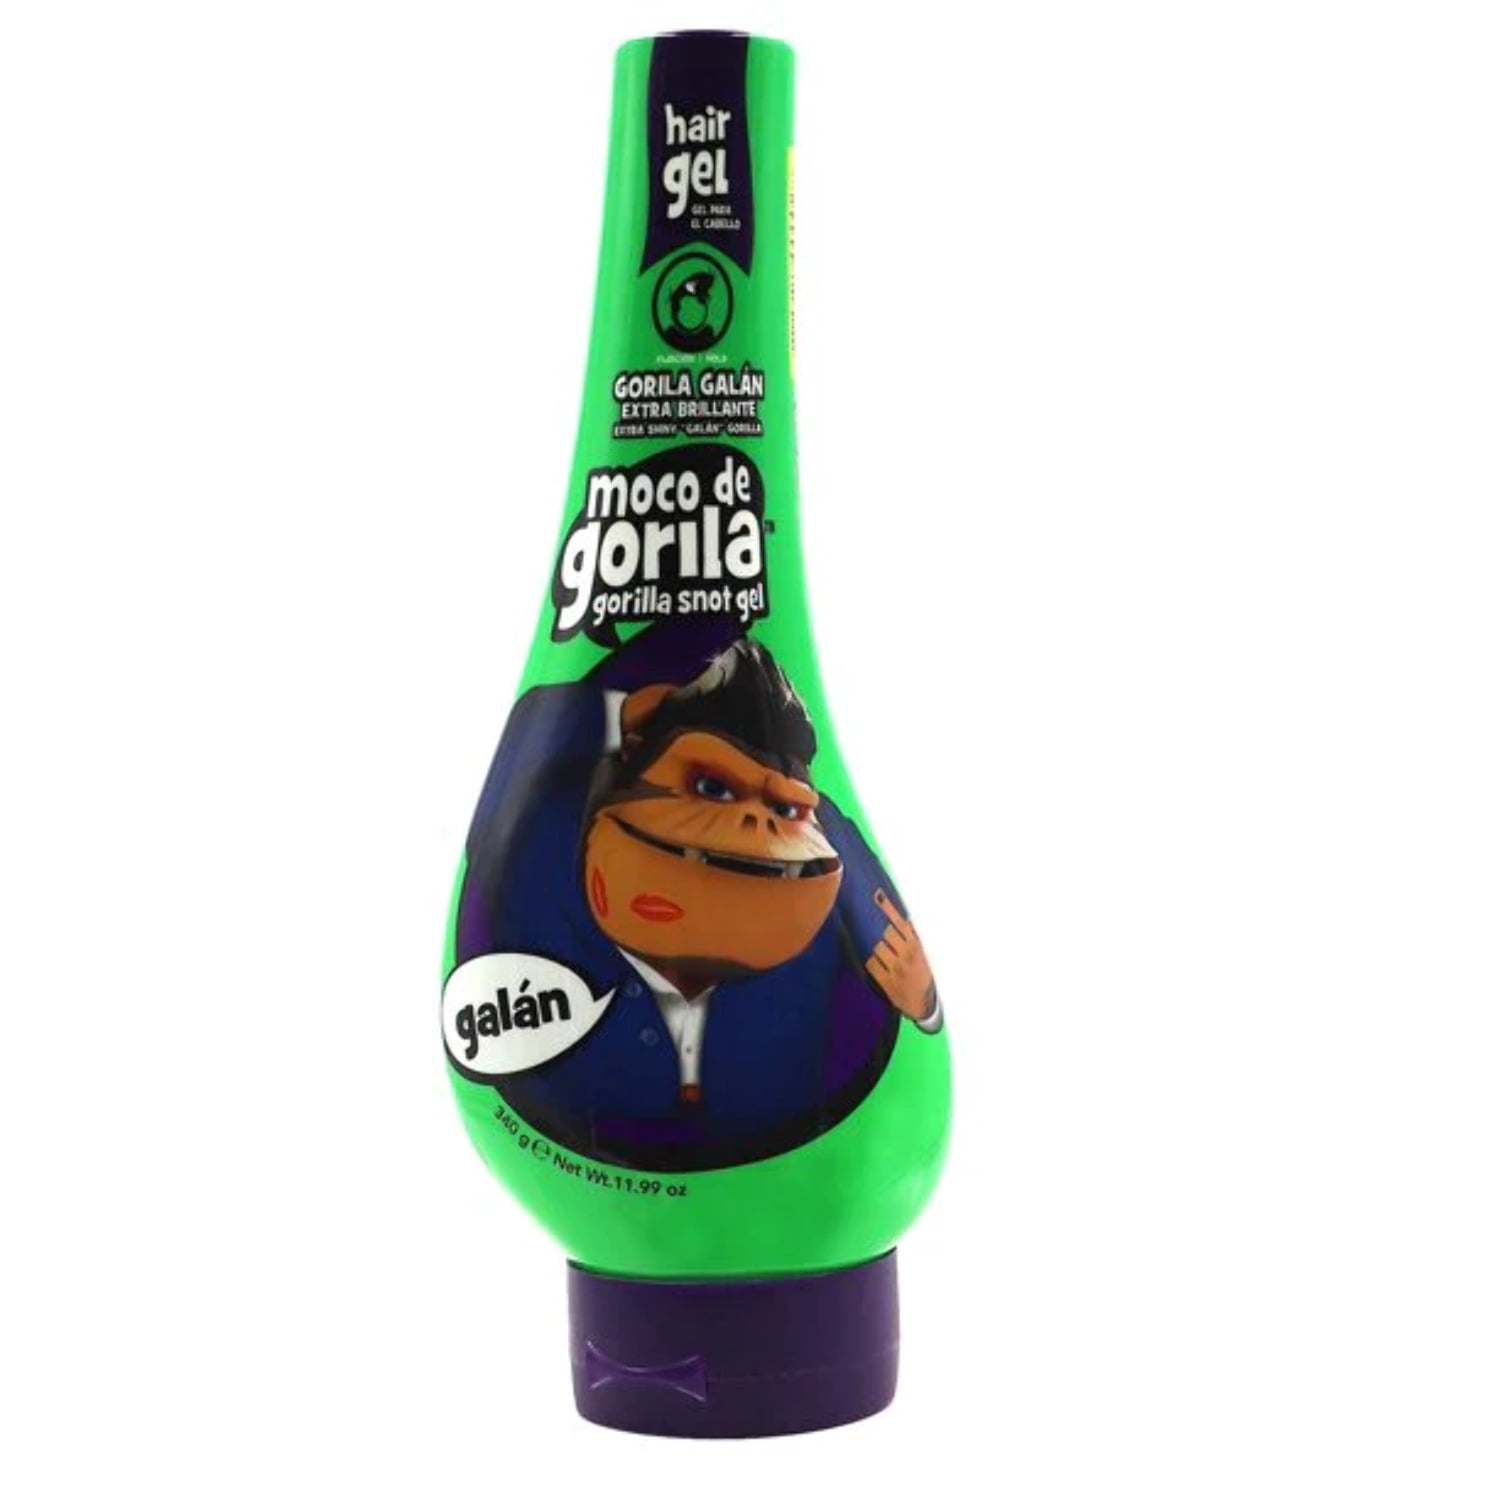 Moco de Gorila Rockero Squizz Hair Gel, Mega Hold - 11.99 oz bottle